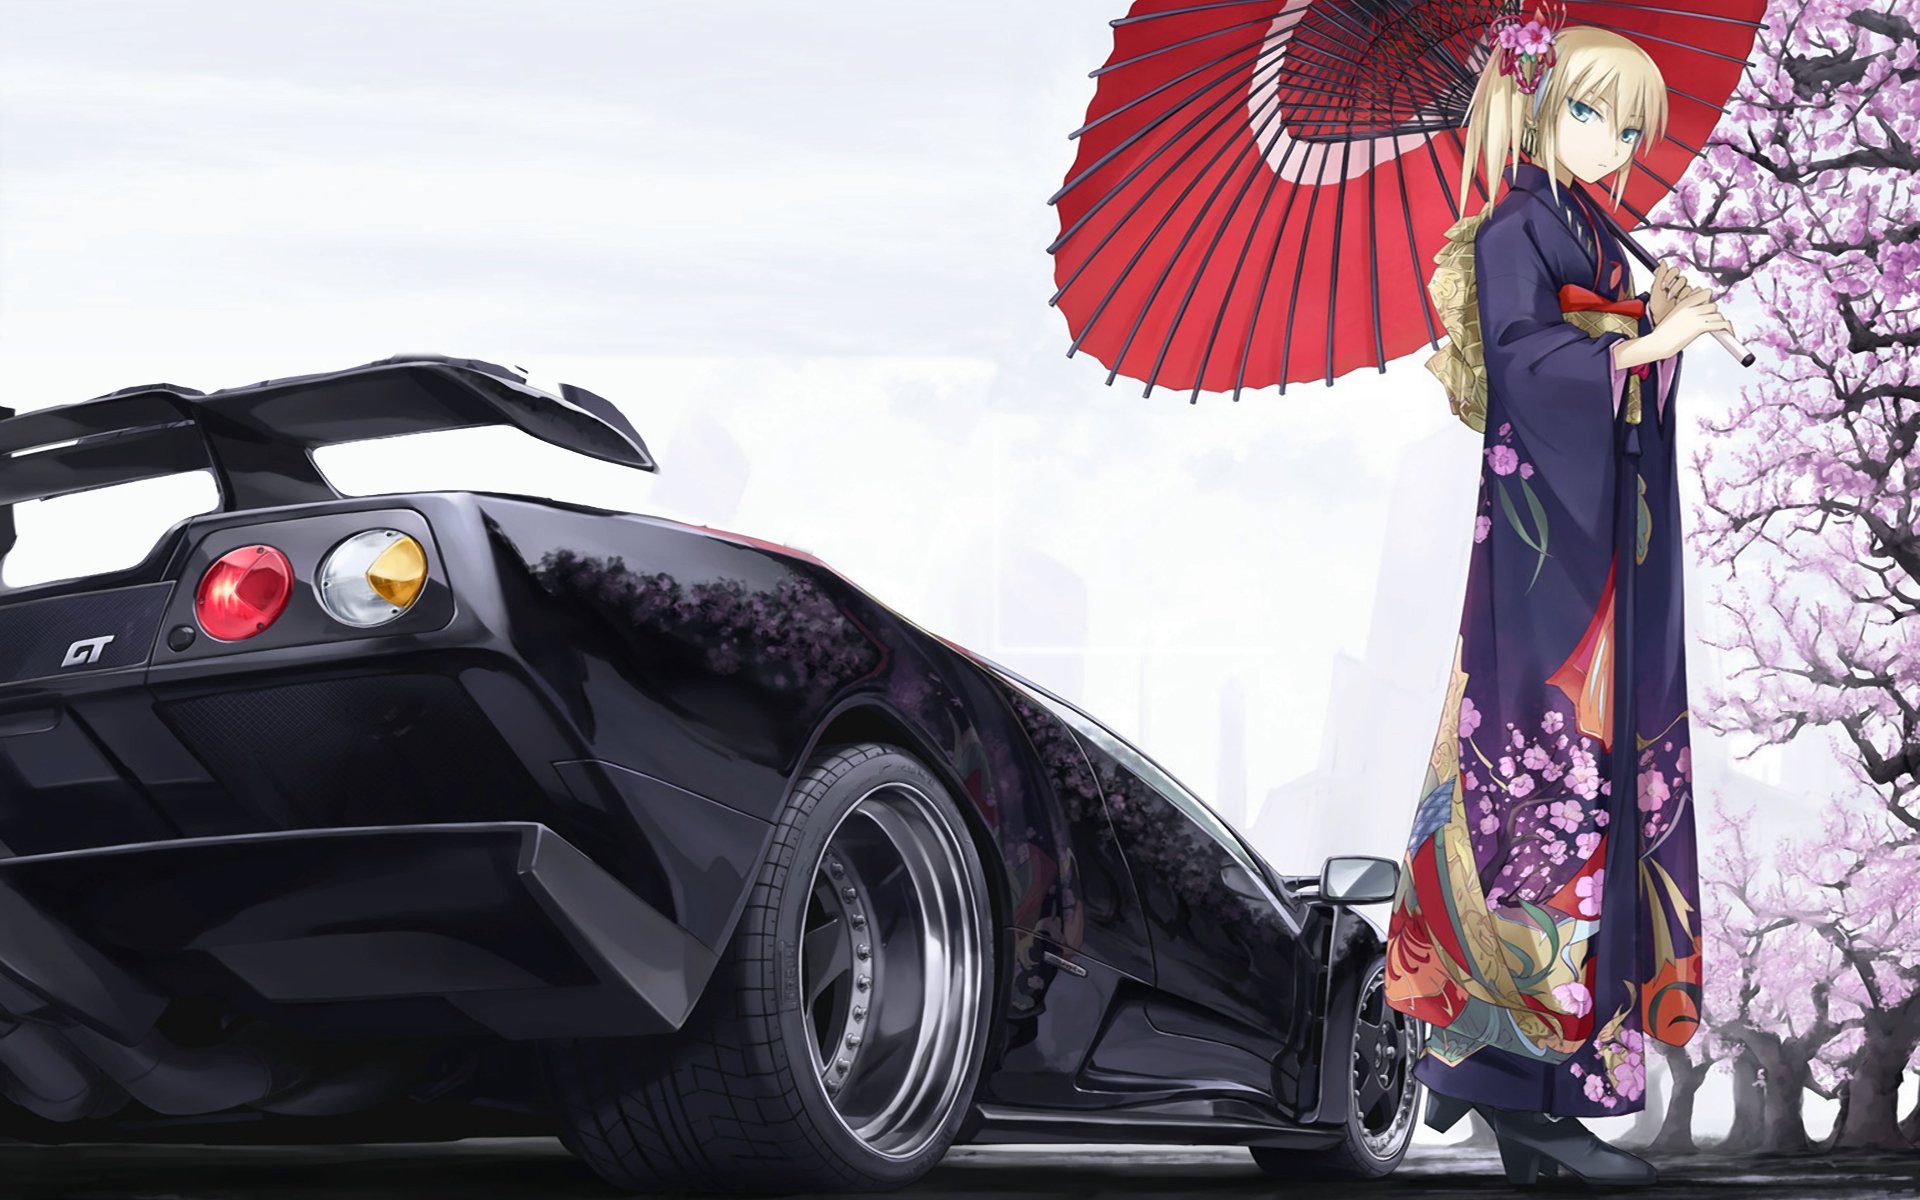 Awesome Anime girl in Kimono free wallpaper ID:151406 for hd 1920x1200 desktop